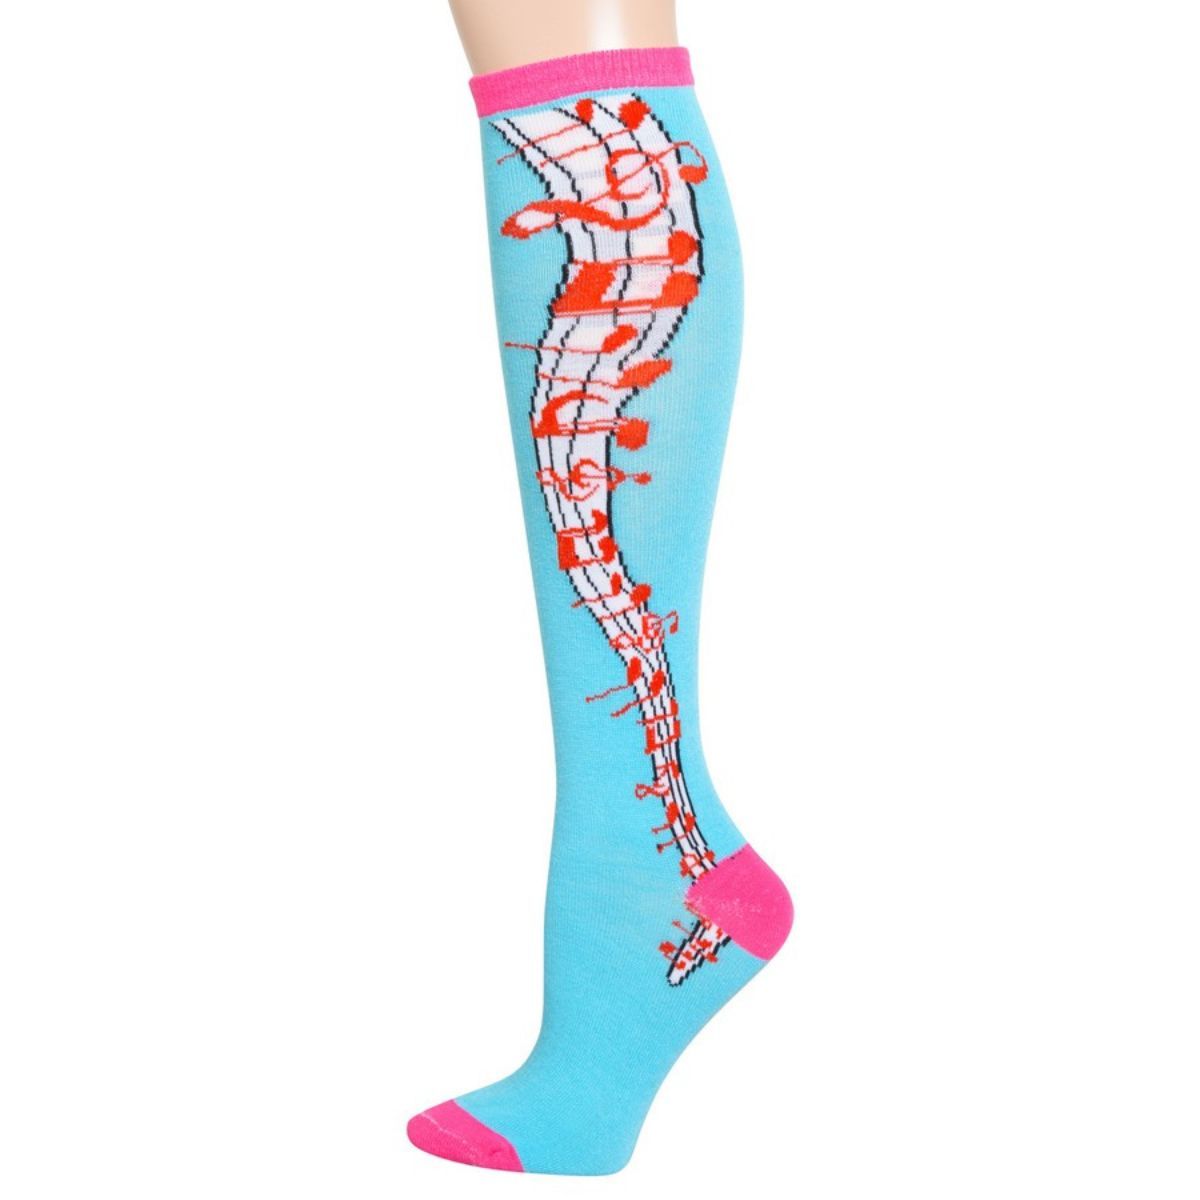 Aqua Musical Knee High Socks